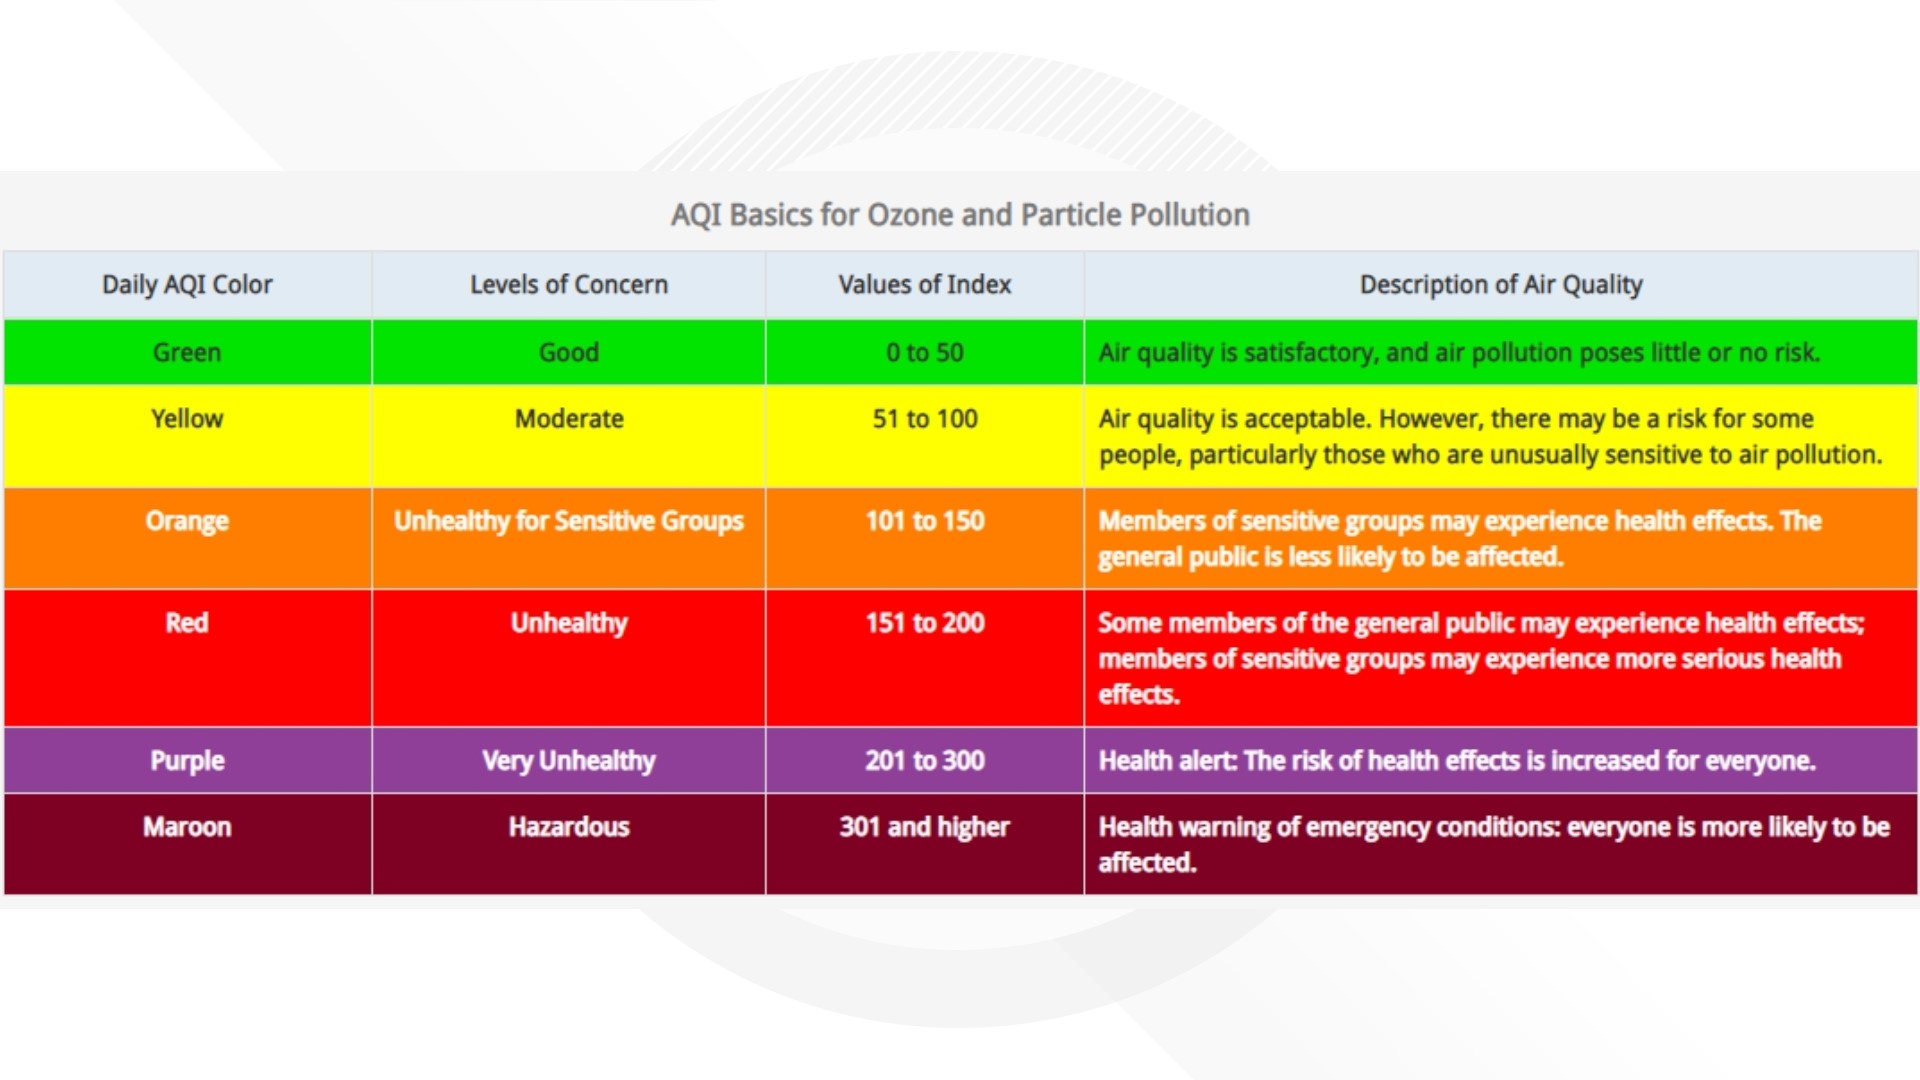 How to protect against wildfire smoke with masks, A/C | verifythis.com